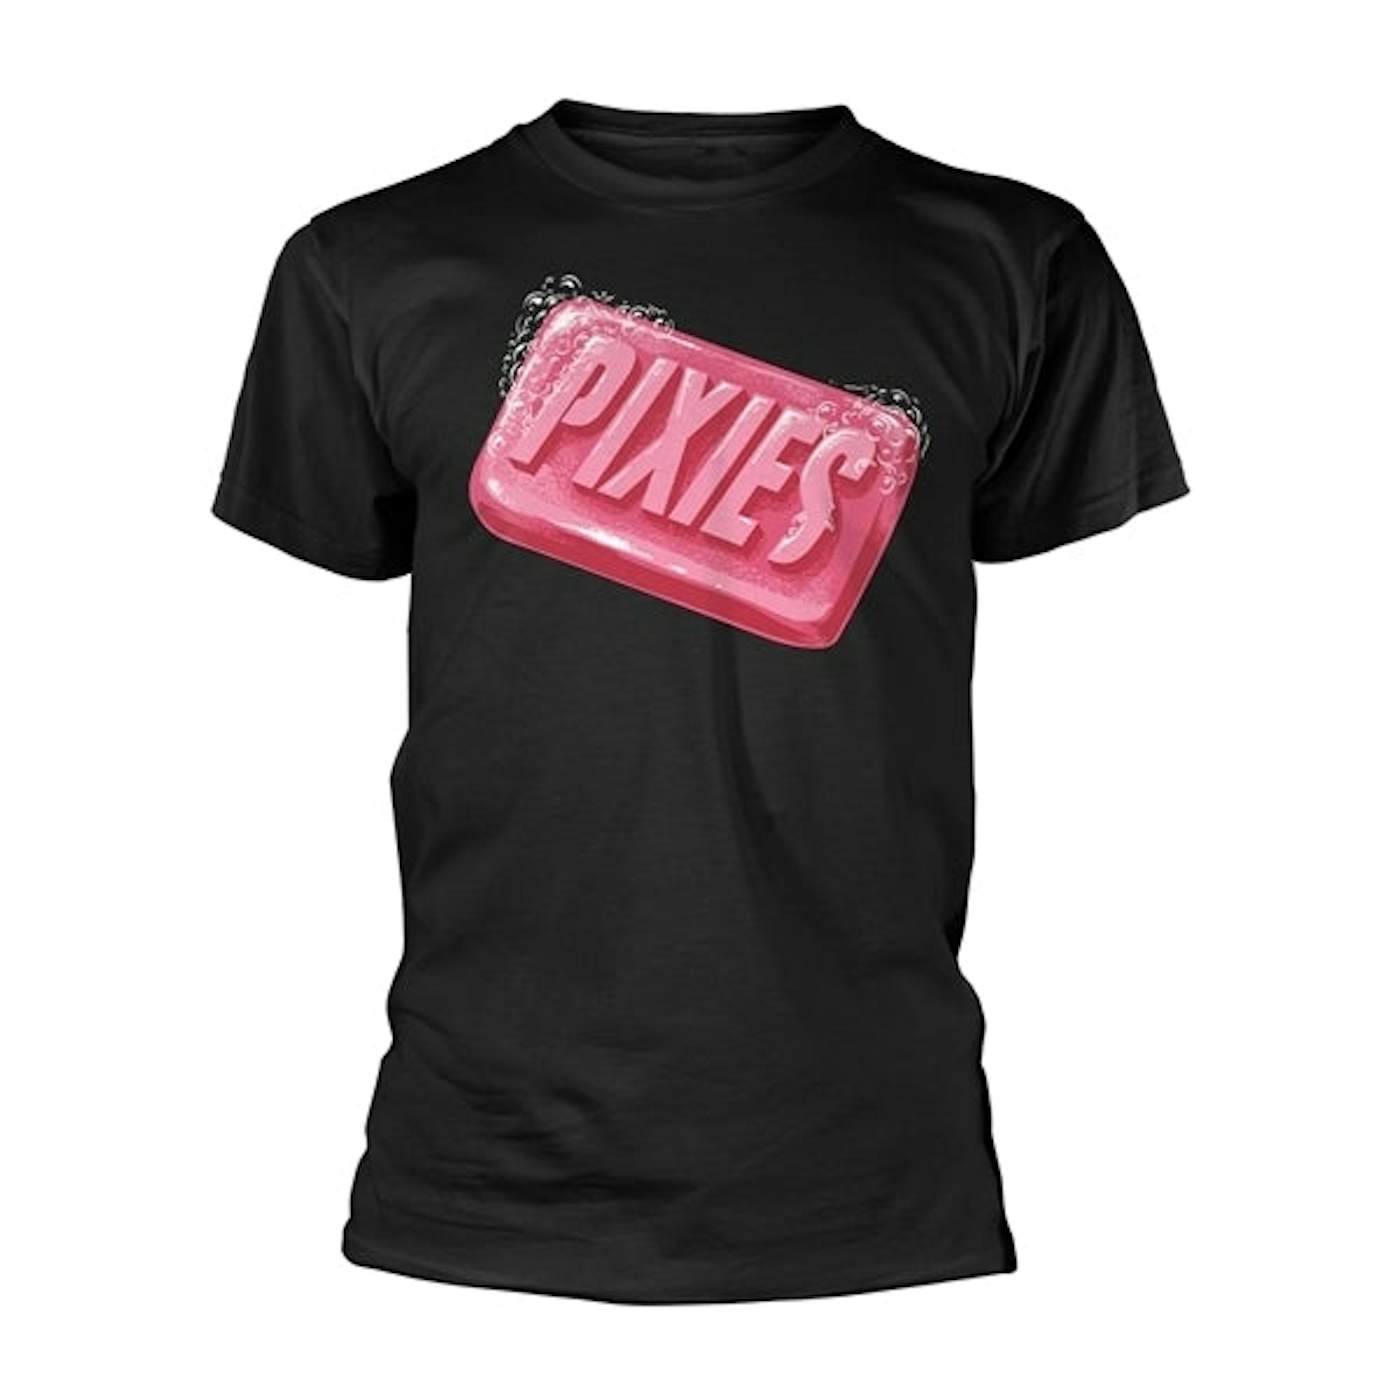 Pixies T-Shirt - Wash Up